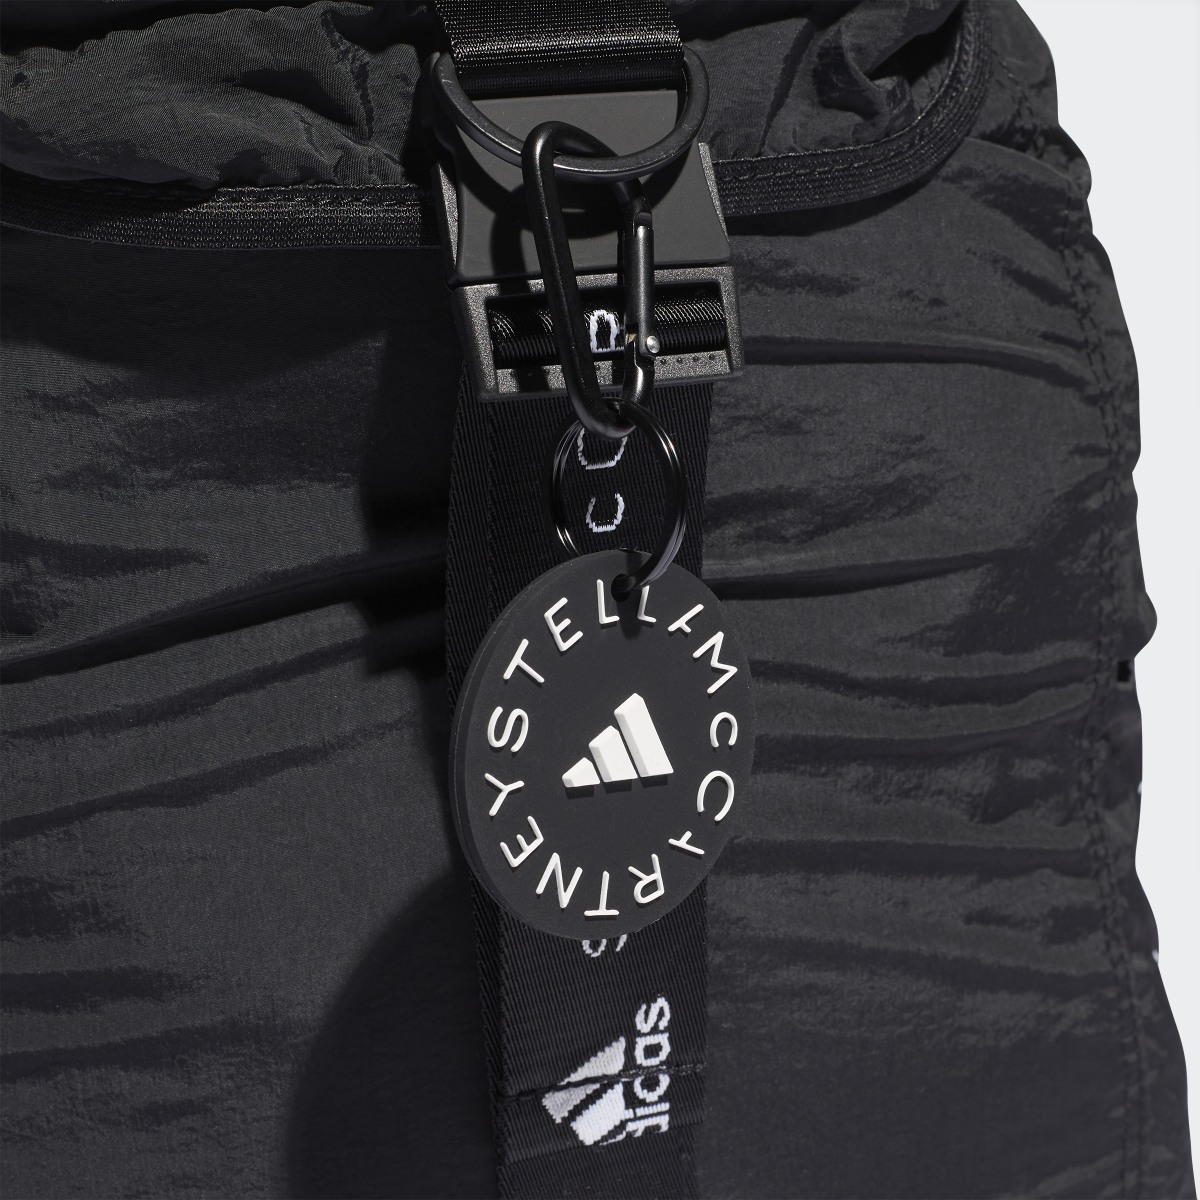 Adidas by Stella McCartney Backpack. 6